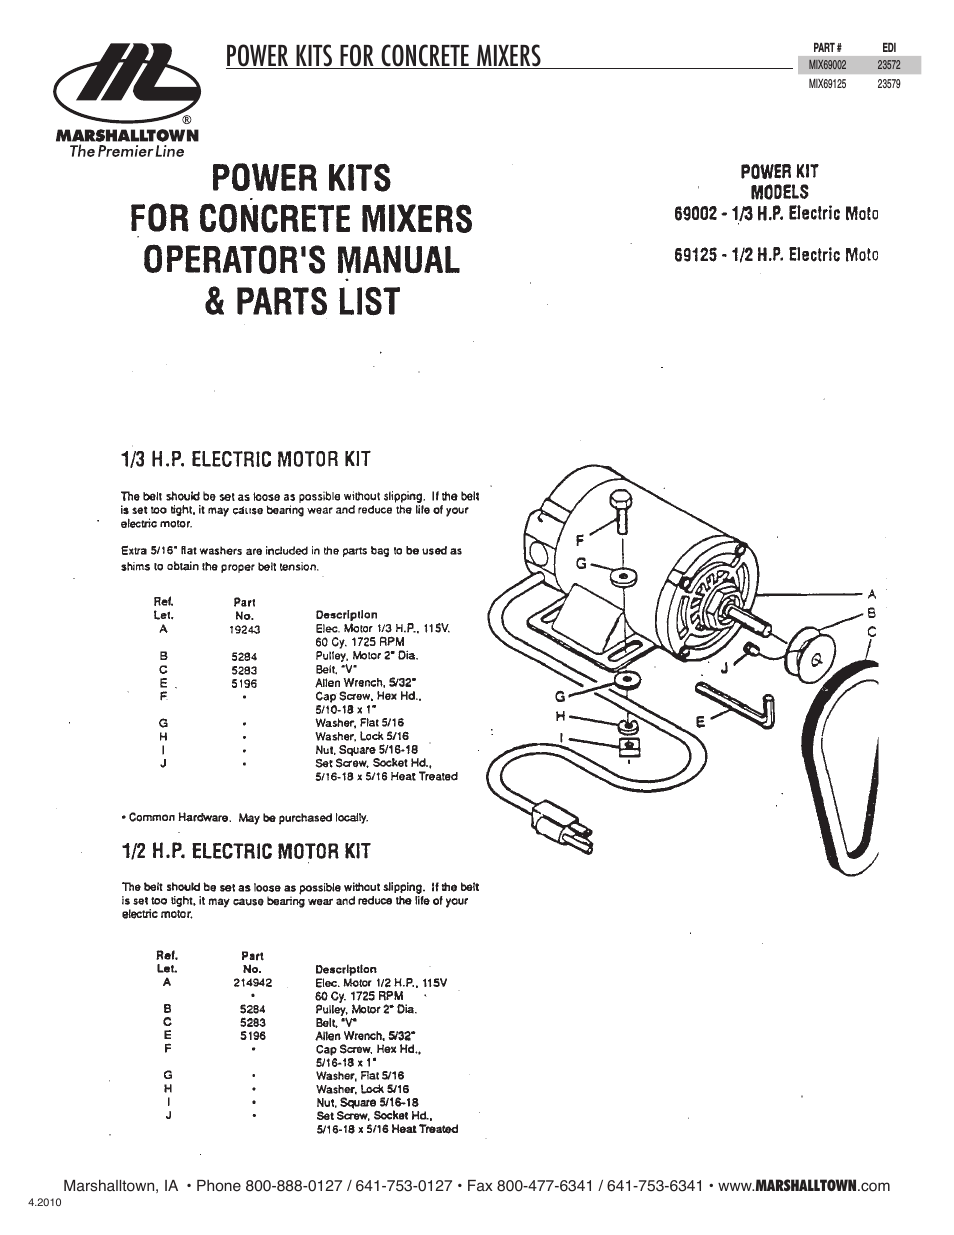 MIX69125 Electric Motor Kits